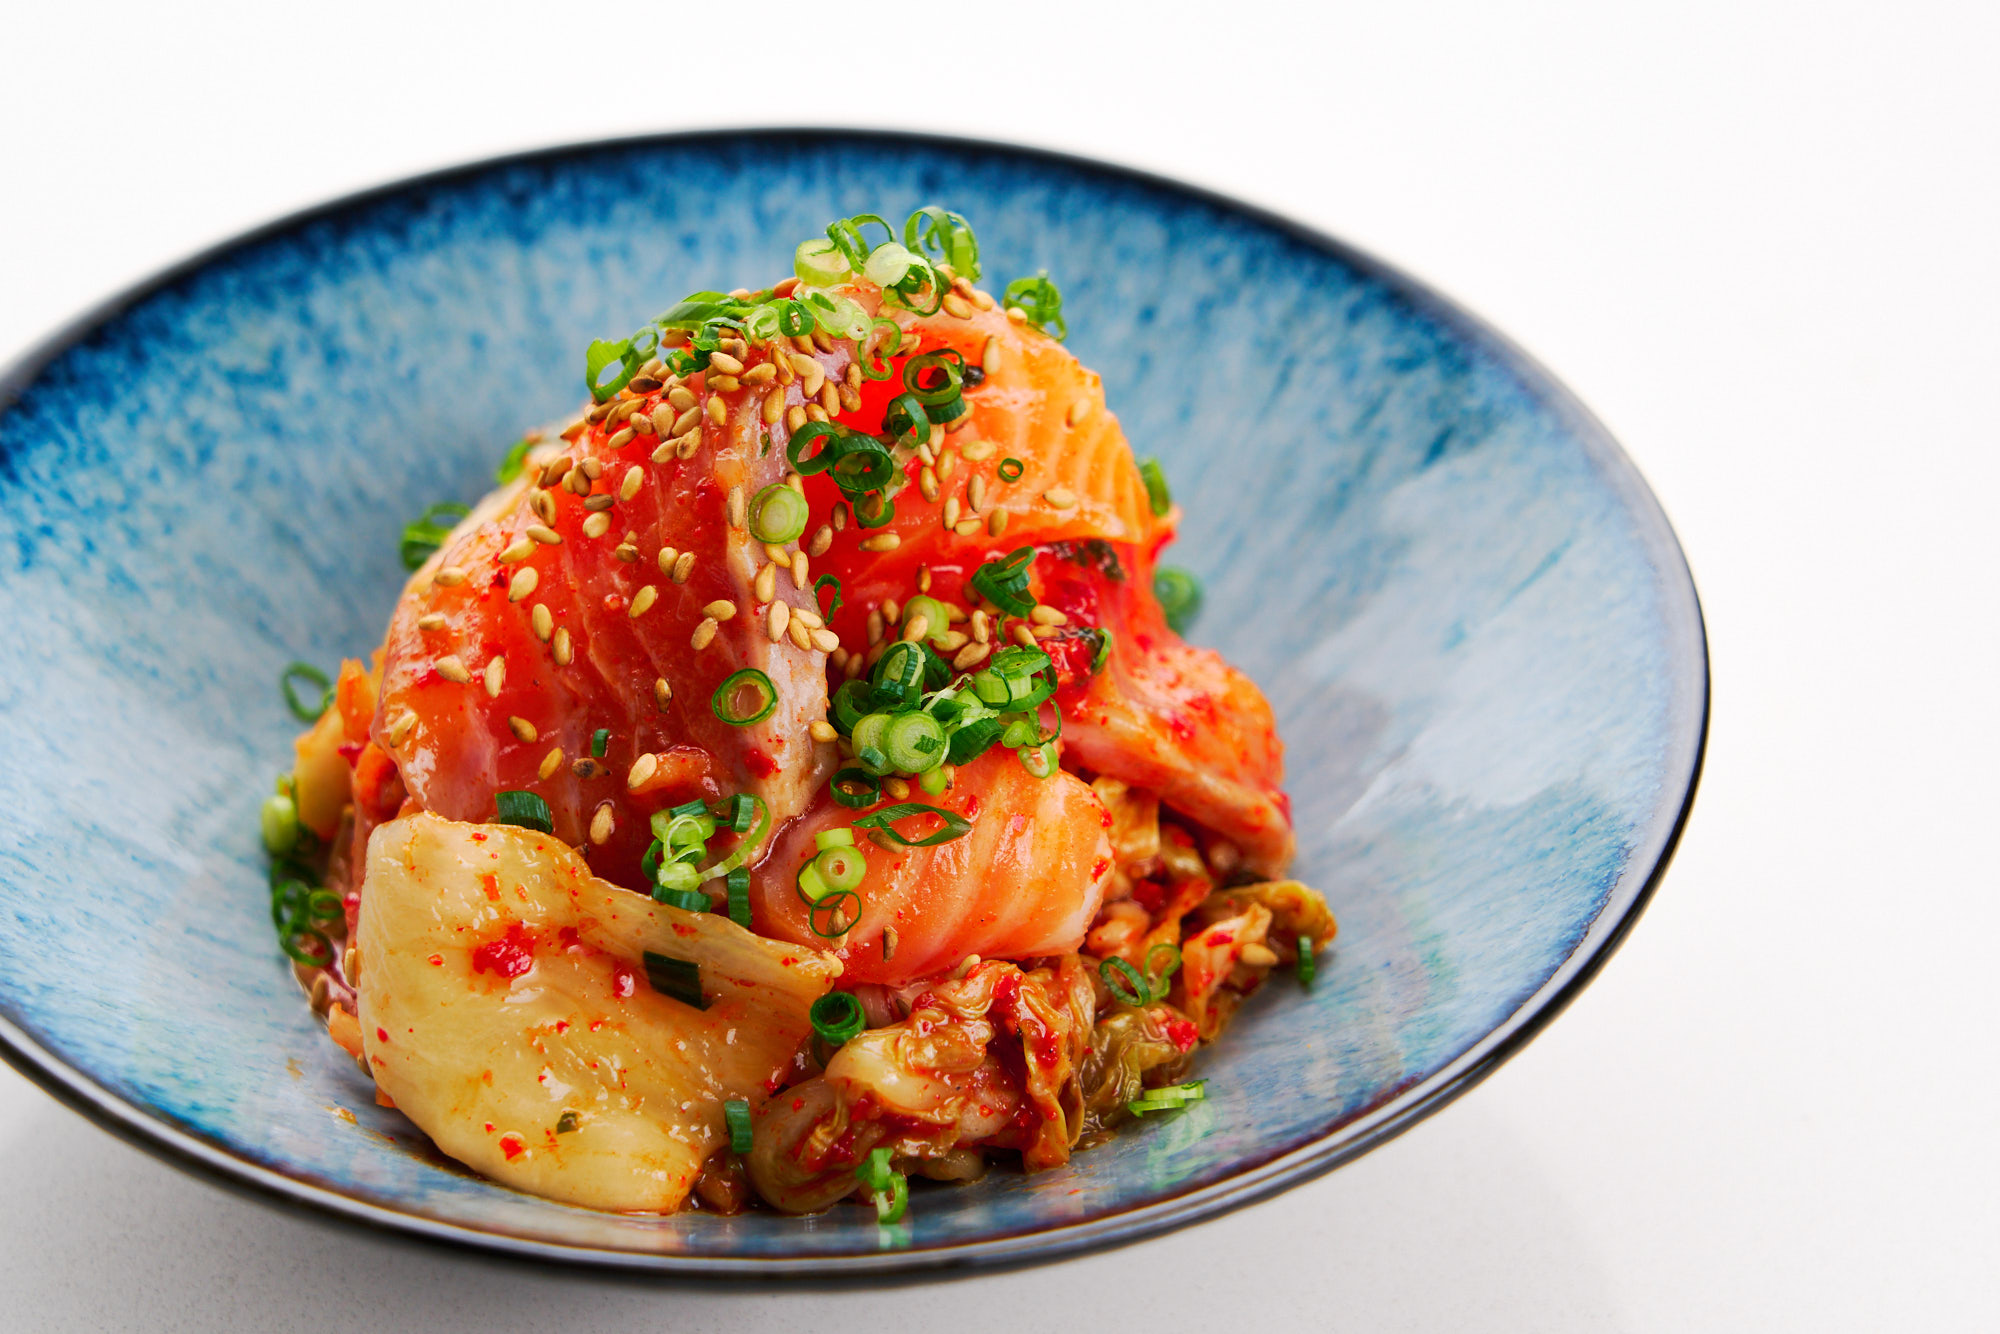 Kimchi Cured Salmon ready to serve